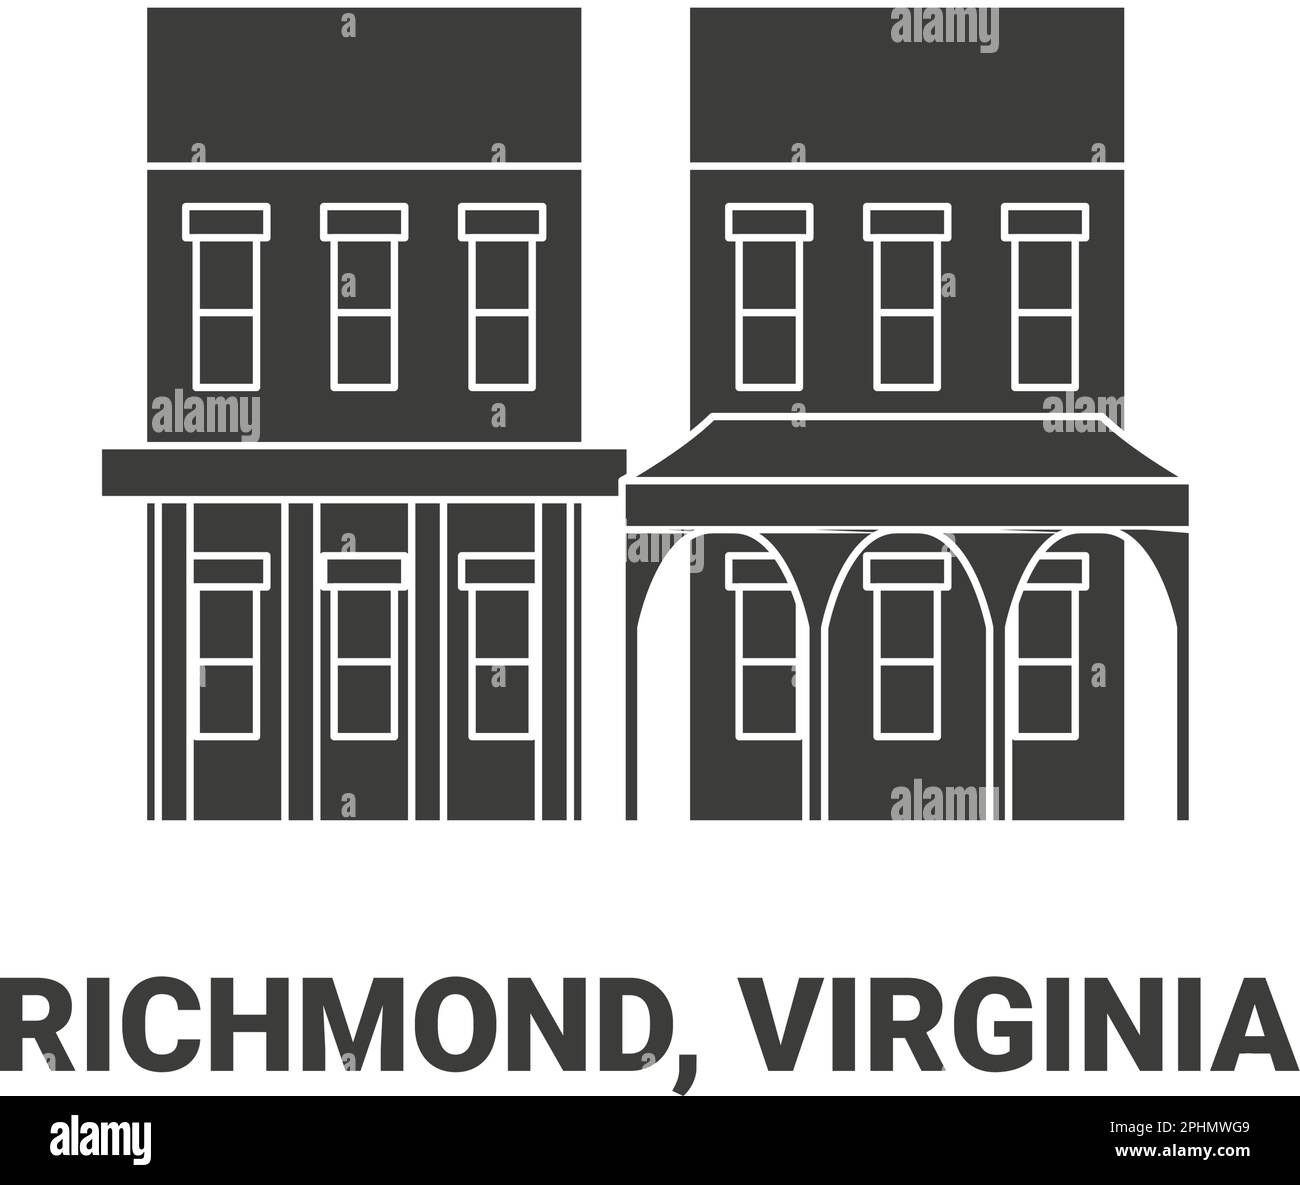 United States, Richmond, Virginia travel landmark vector illustration Stock Vector